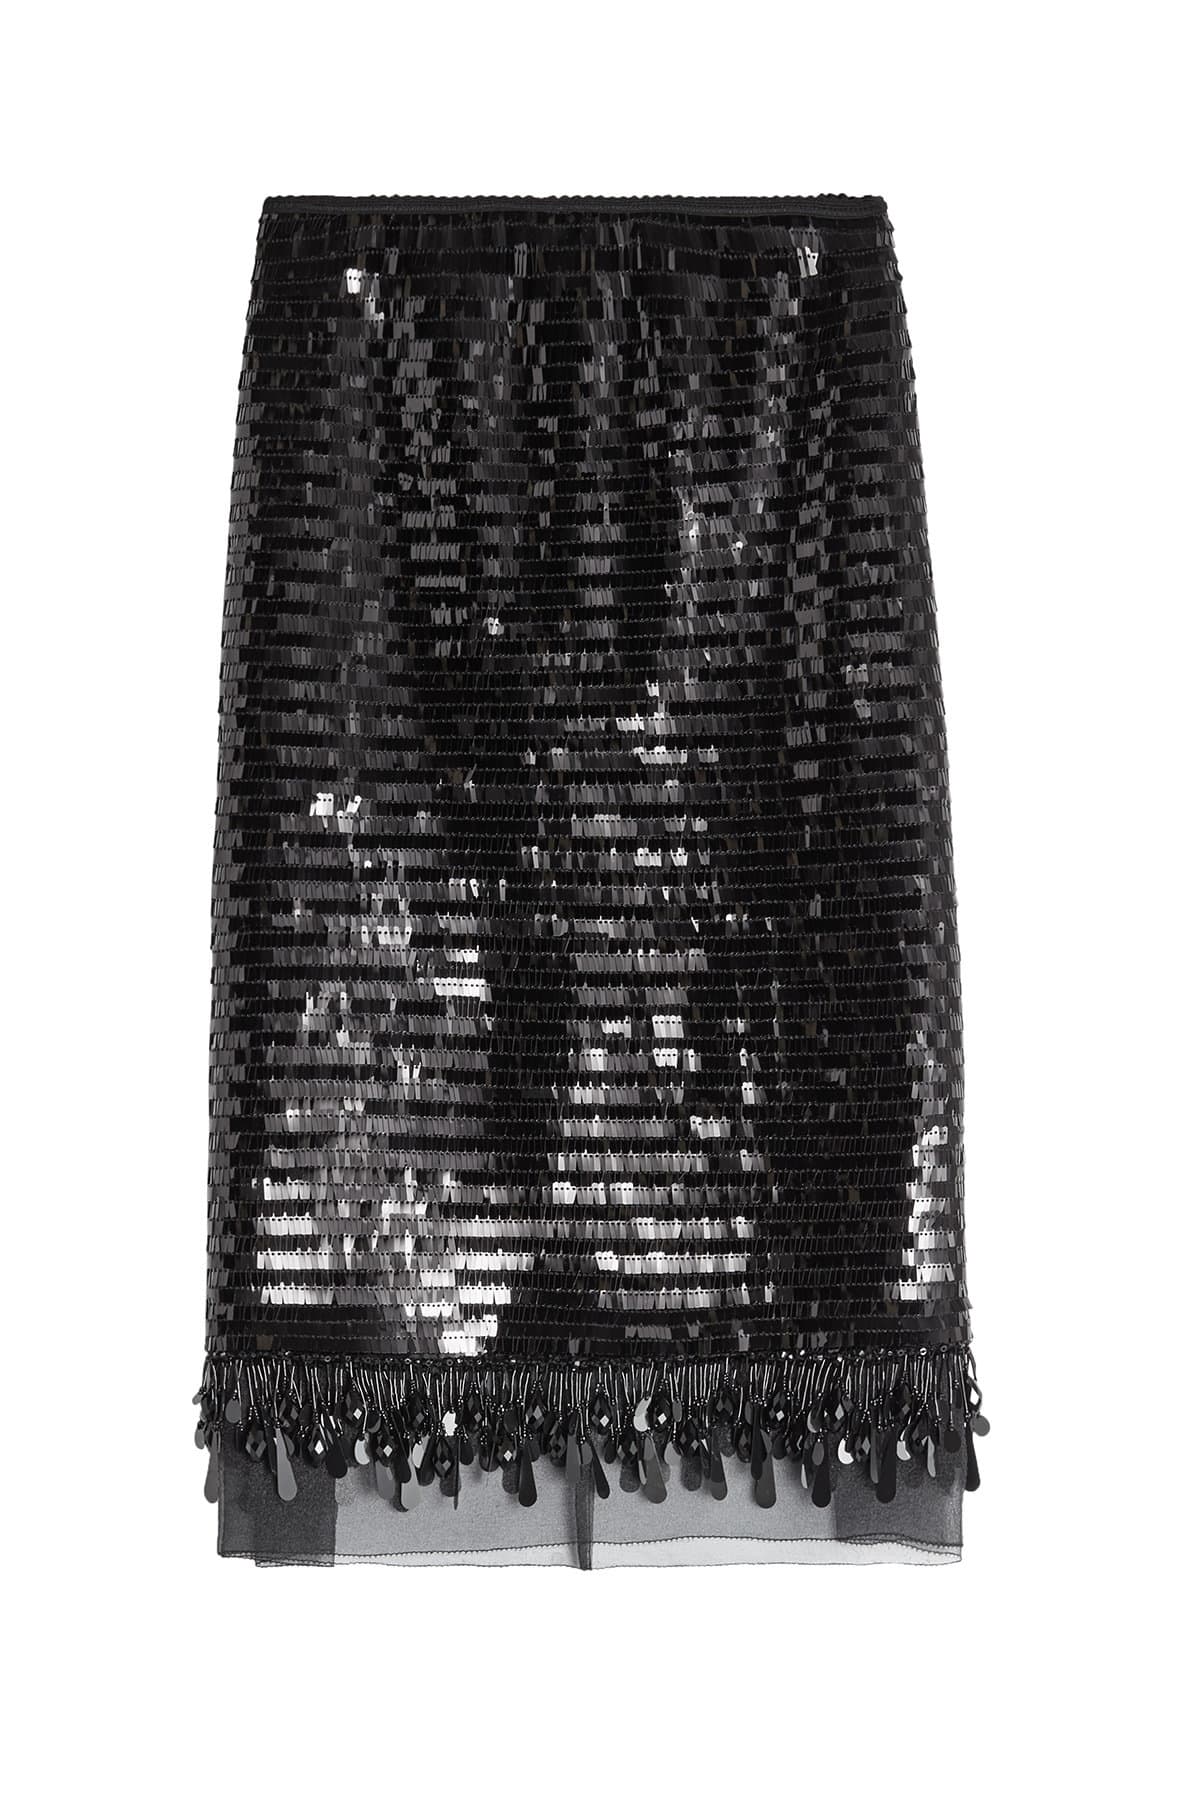 Sequin Fringe Skirt by Marc Jacobs